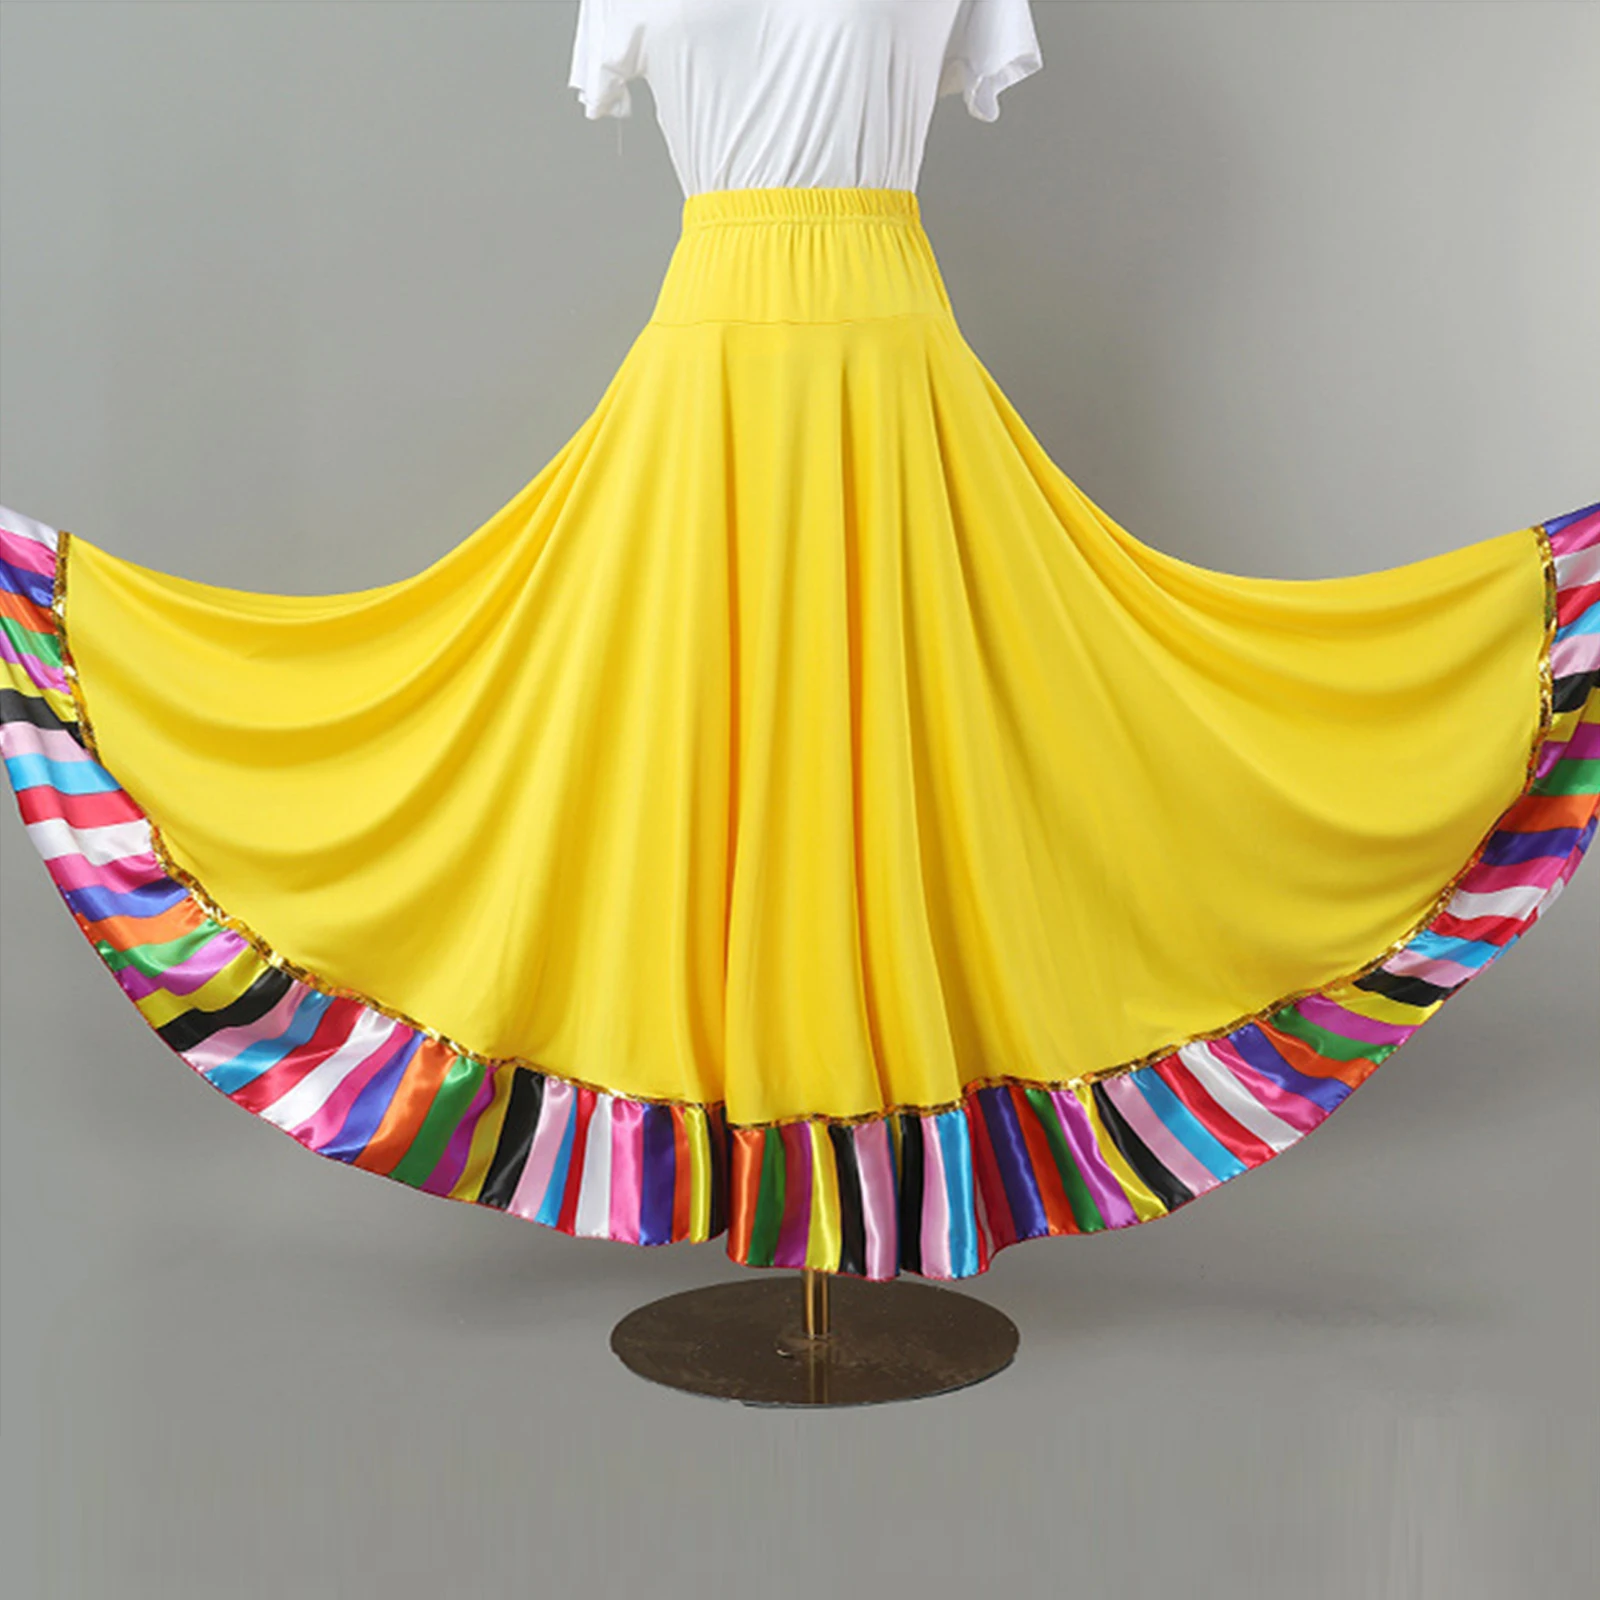 Womens Flamenco Dance Skirt High Waist Colorful Stripe Hem Spanish Folk Midi Swing Skirts Ballroom Stage Performance Costume